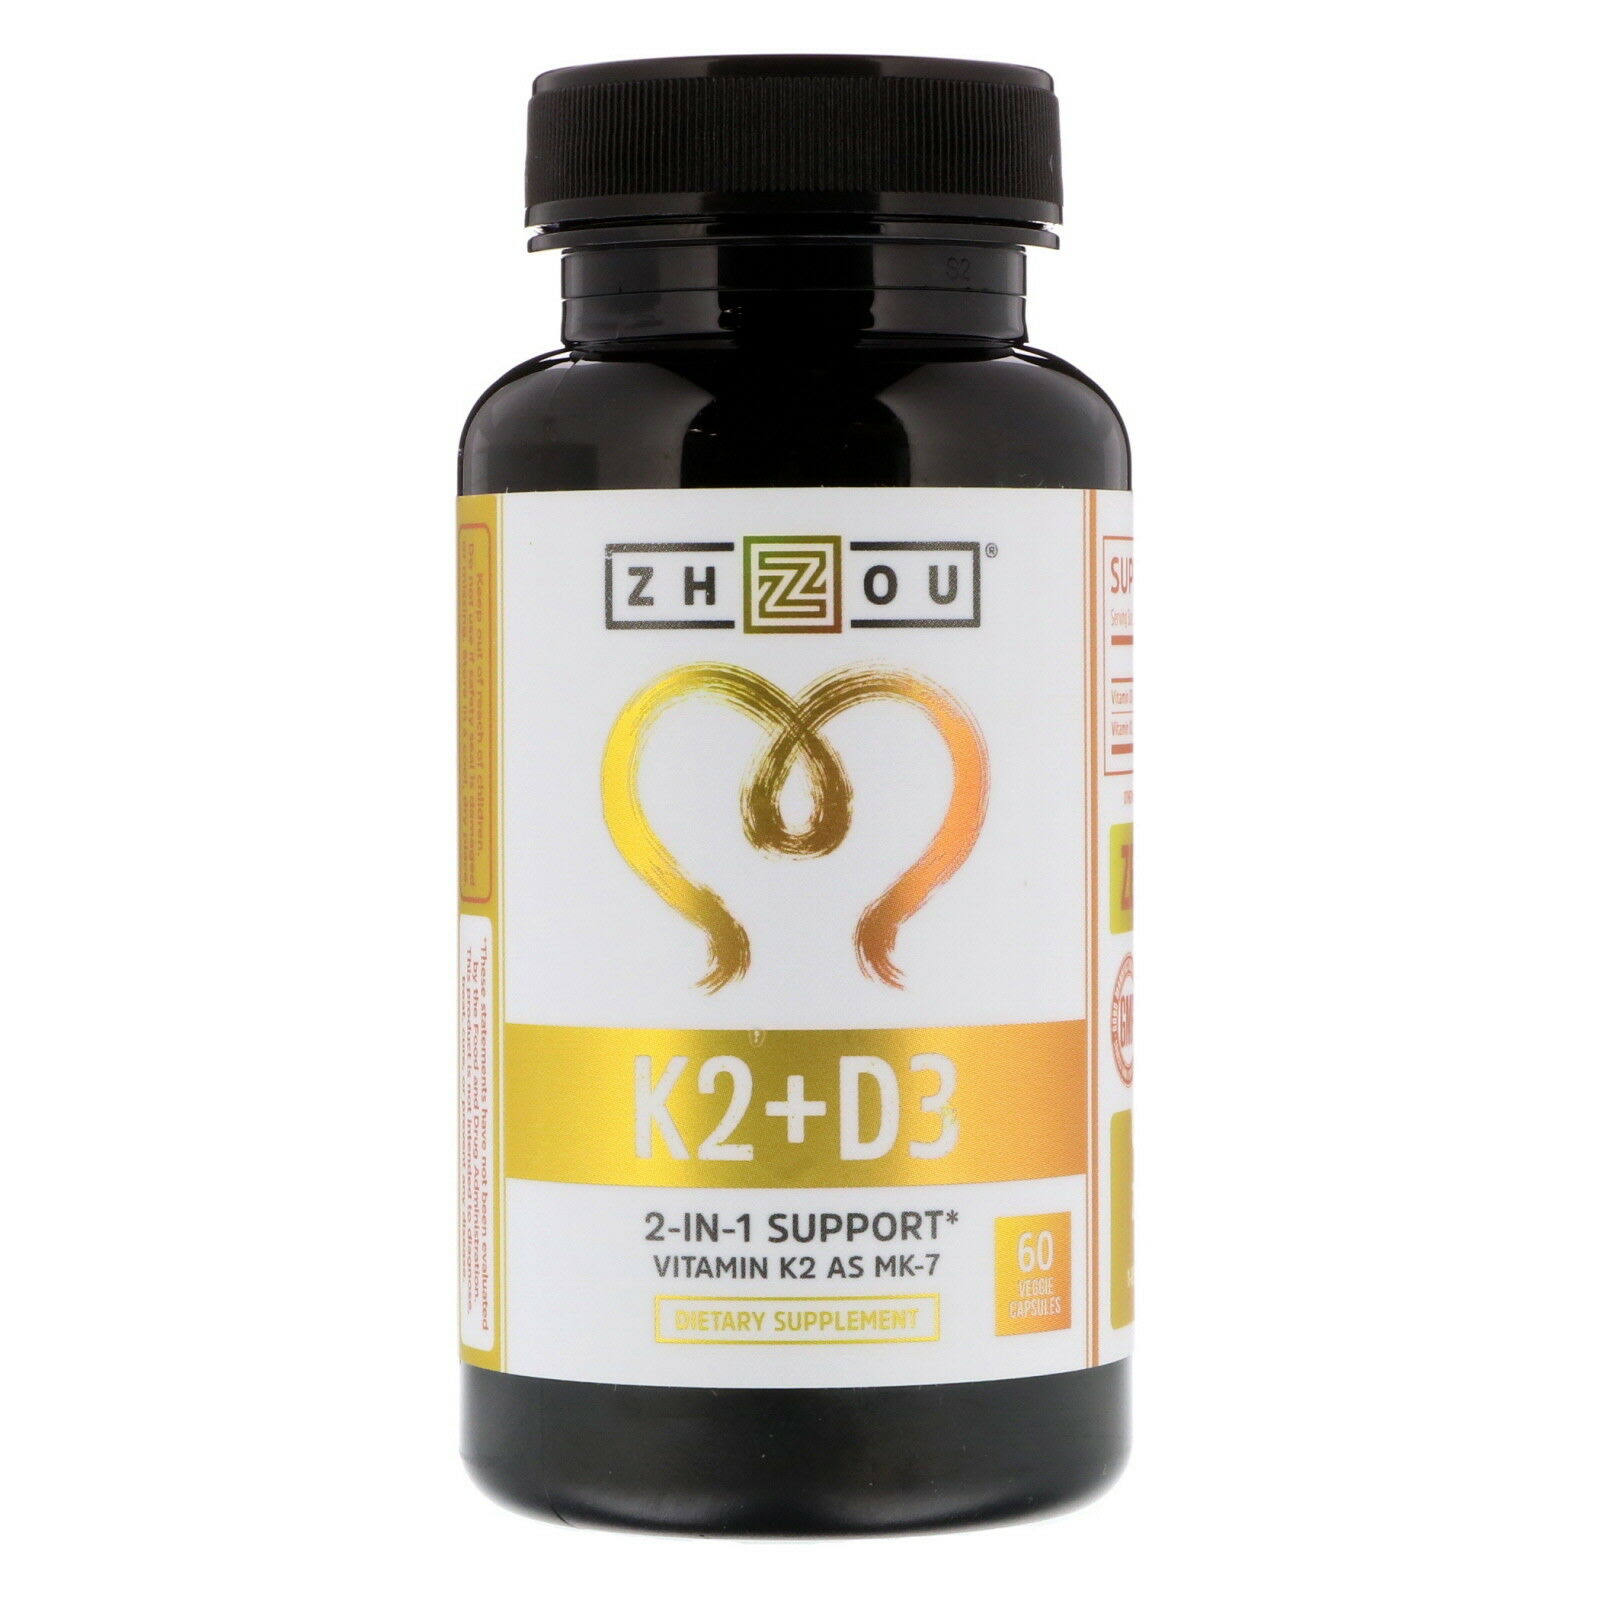 Zhou Nutrition K2 Dietary Supplement - 60ct